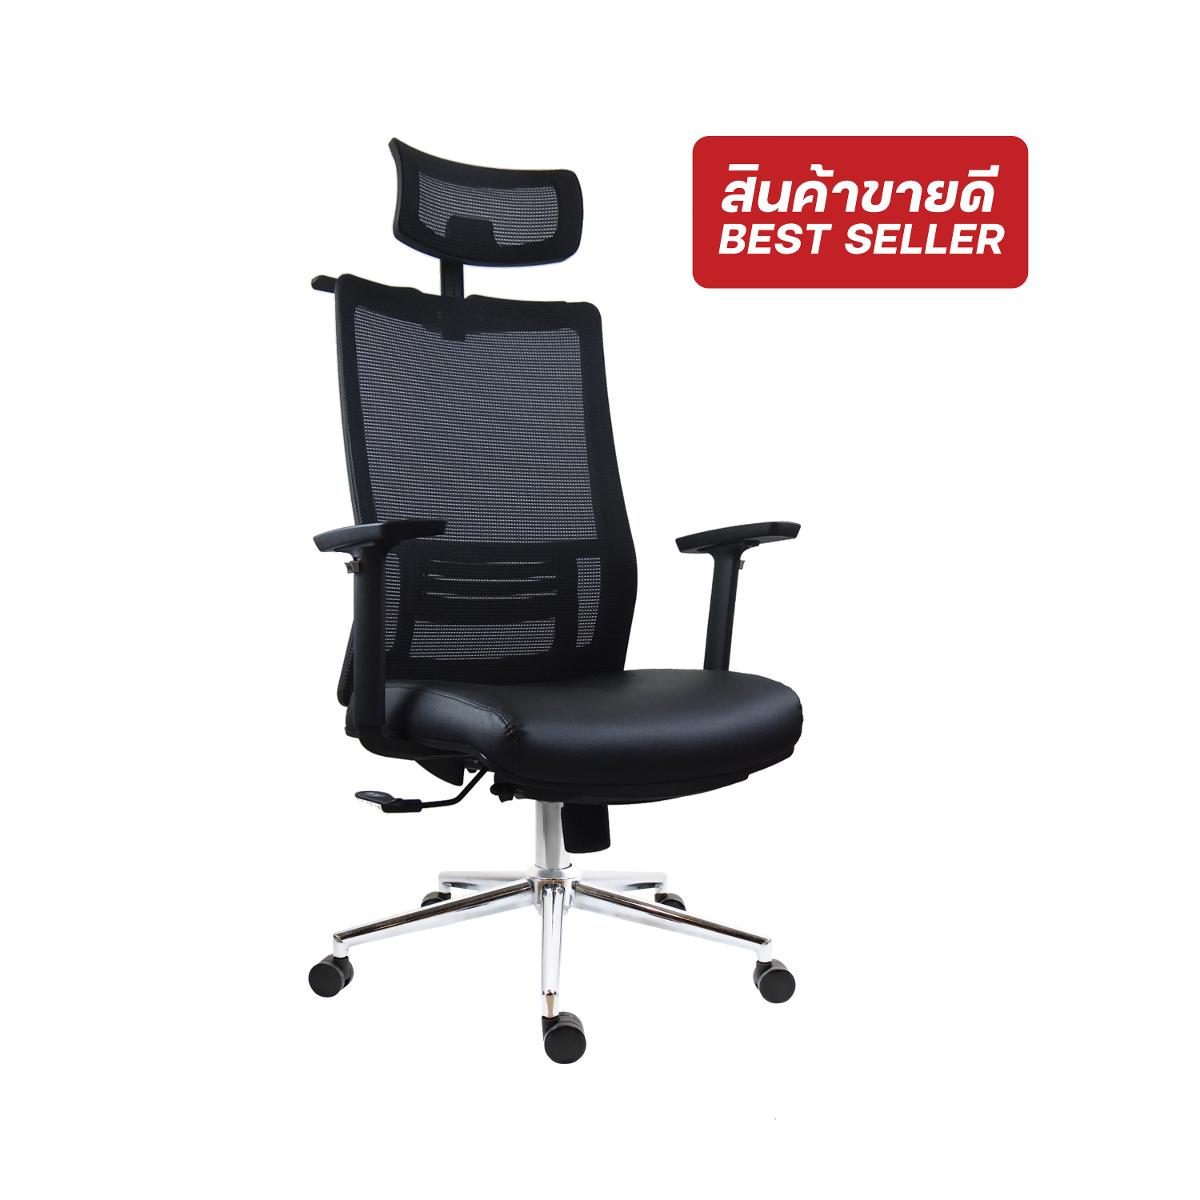 Super Chair เก้าอี้สำนักงานผู้บริหาร รุ่น PREMIUM 750 H